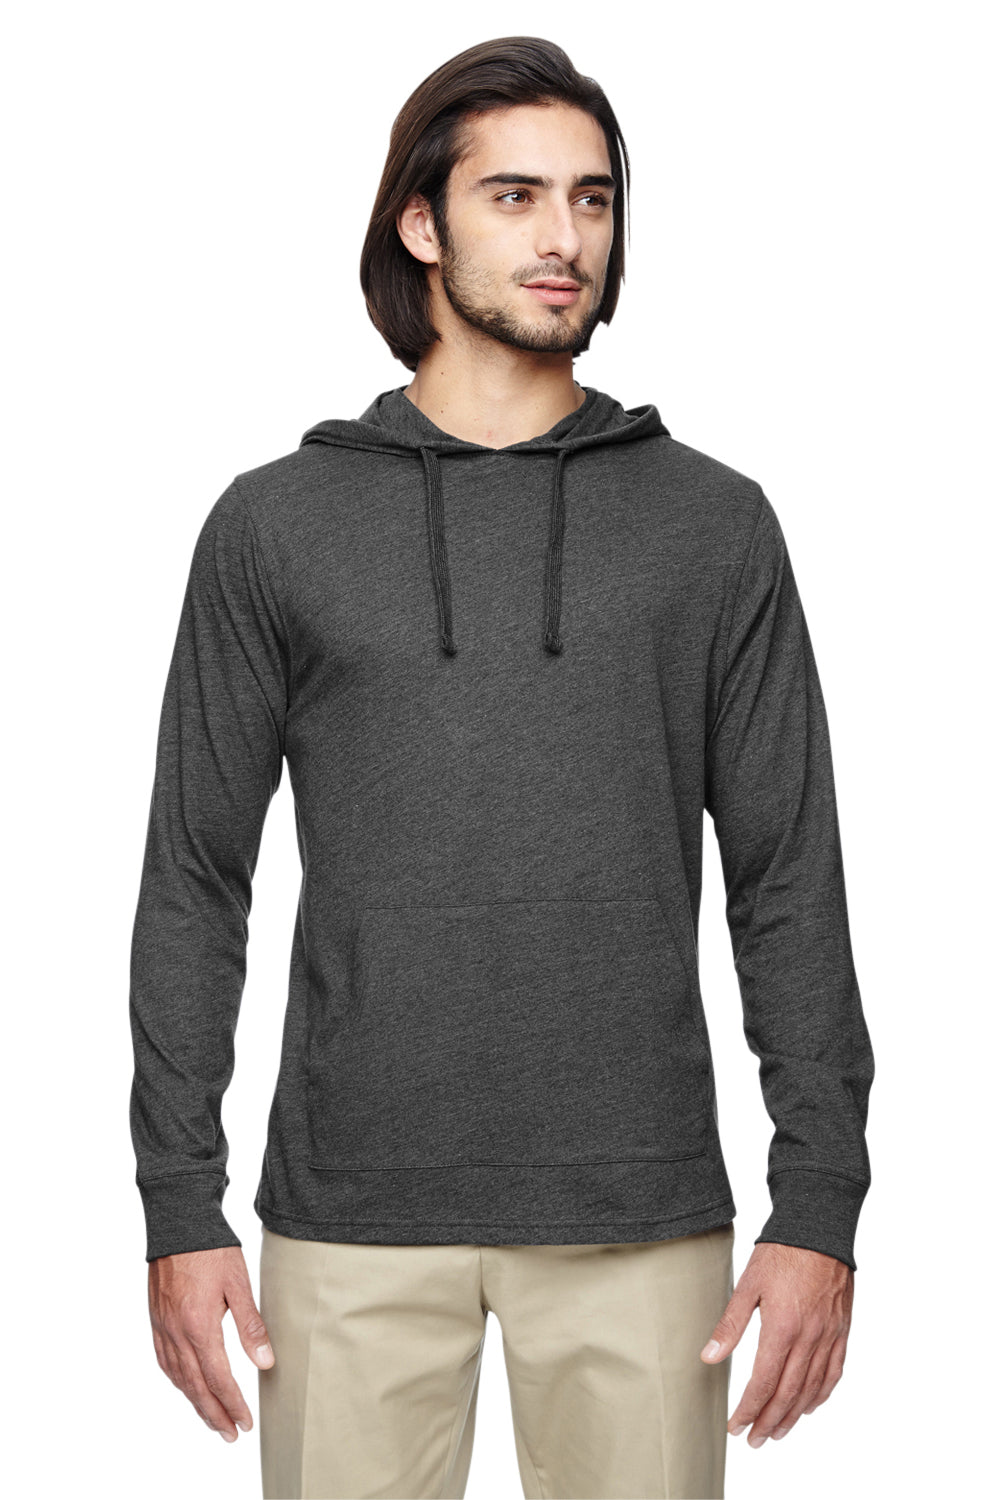 Econscious EC1085 Mens Eco Jersey Hooded Sweatshirt Hoodie Charcoal Grey Front